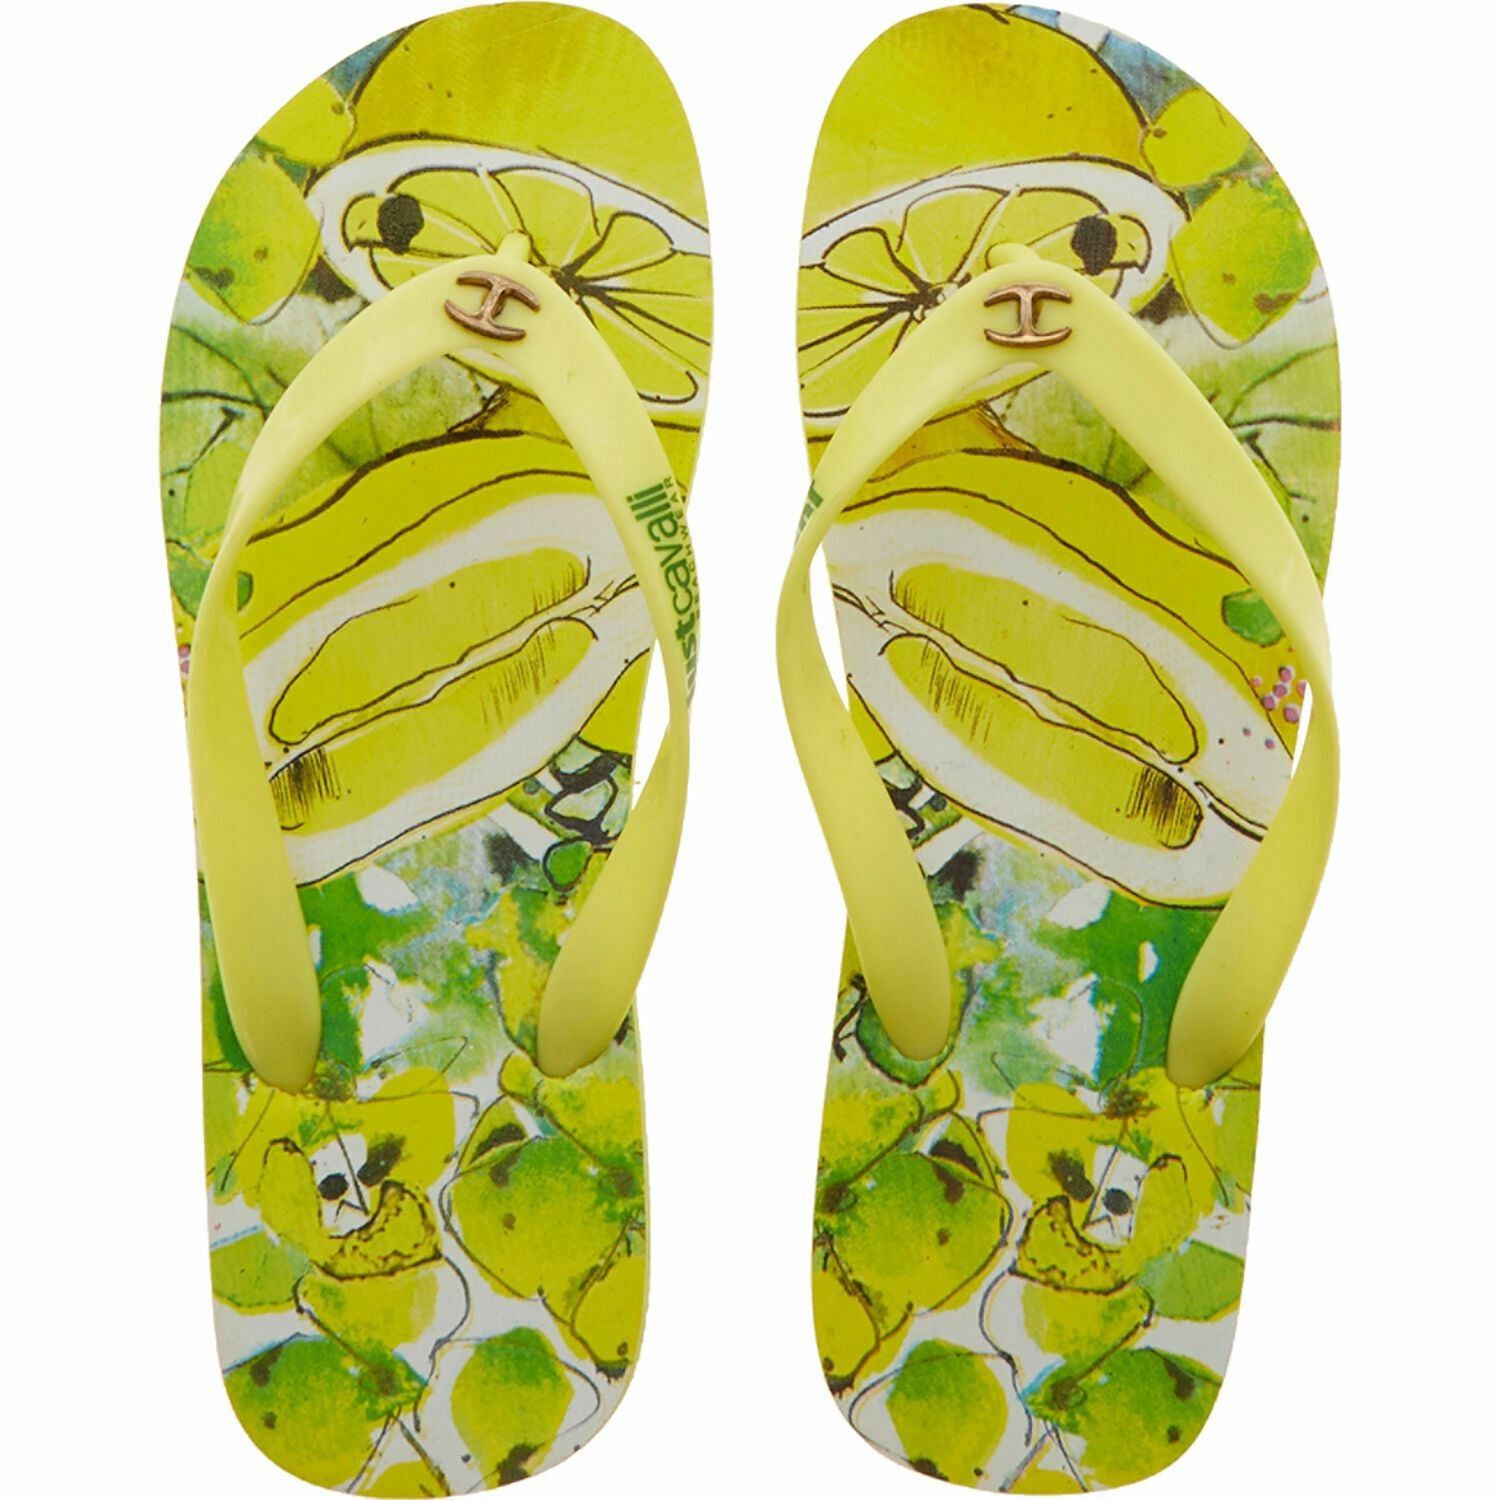 JUST CAVALLI Beachwear: Women's Summer Flip Flops / Sandals, Yellow, size UK 5